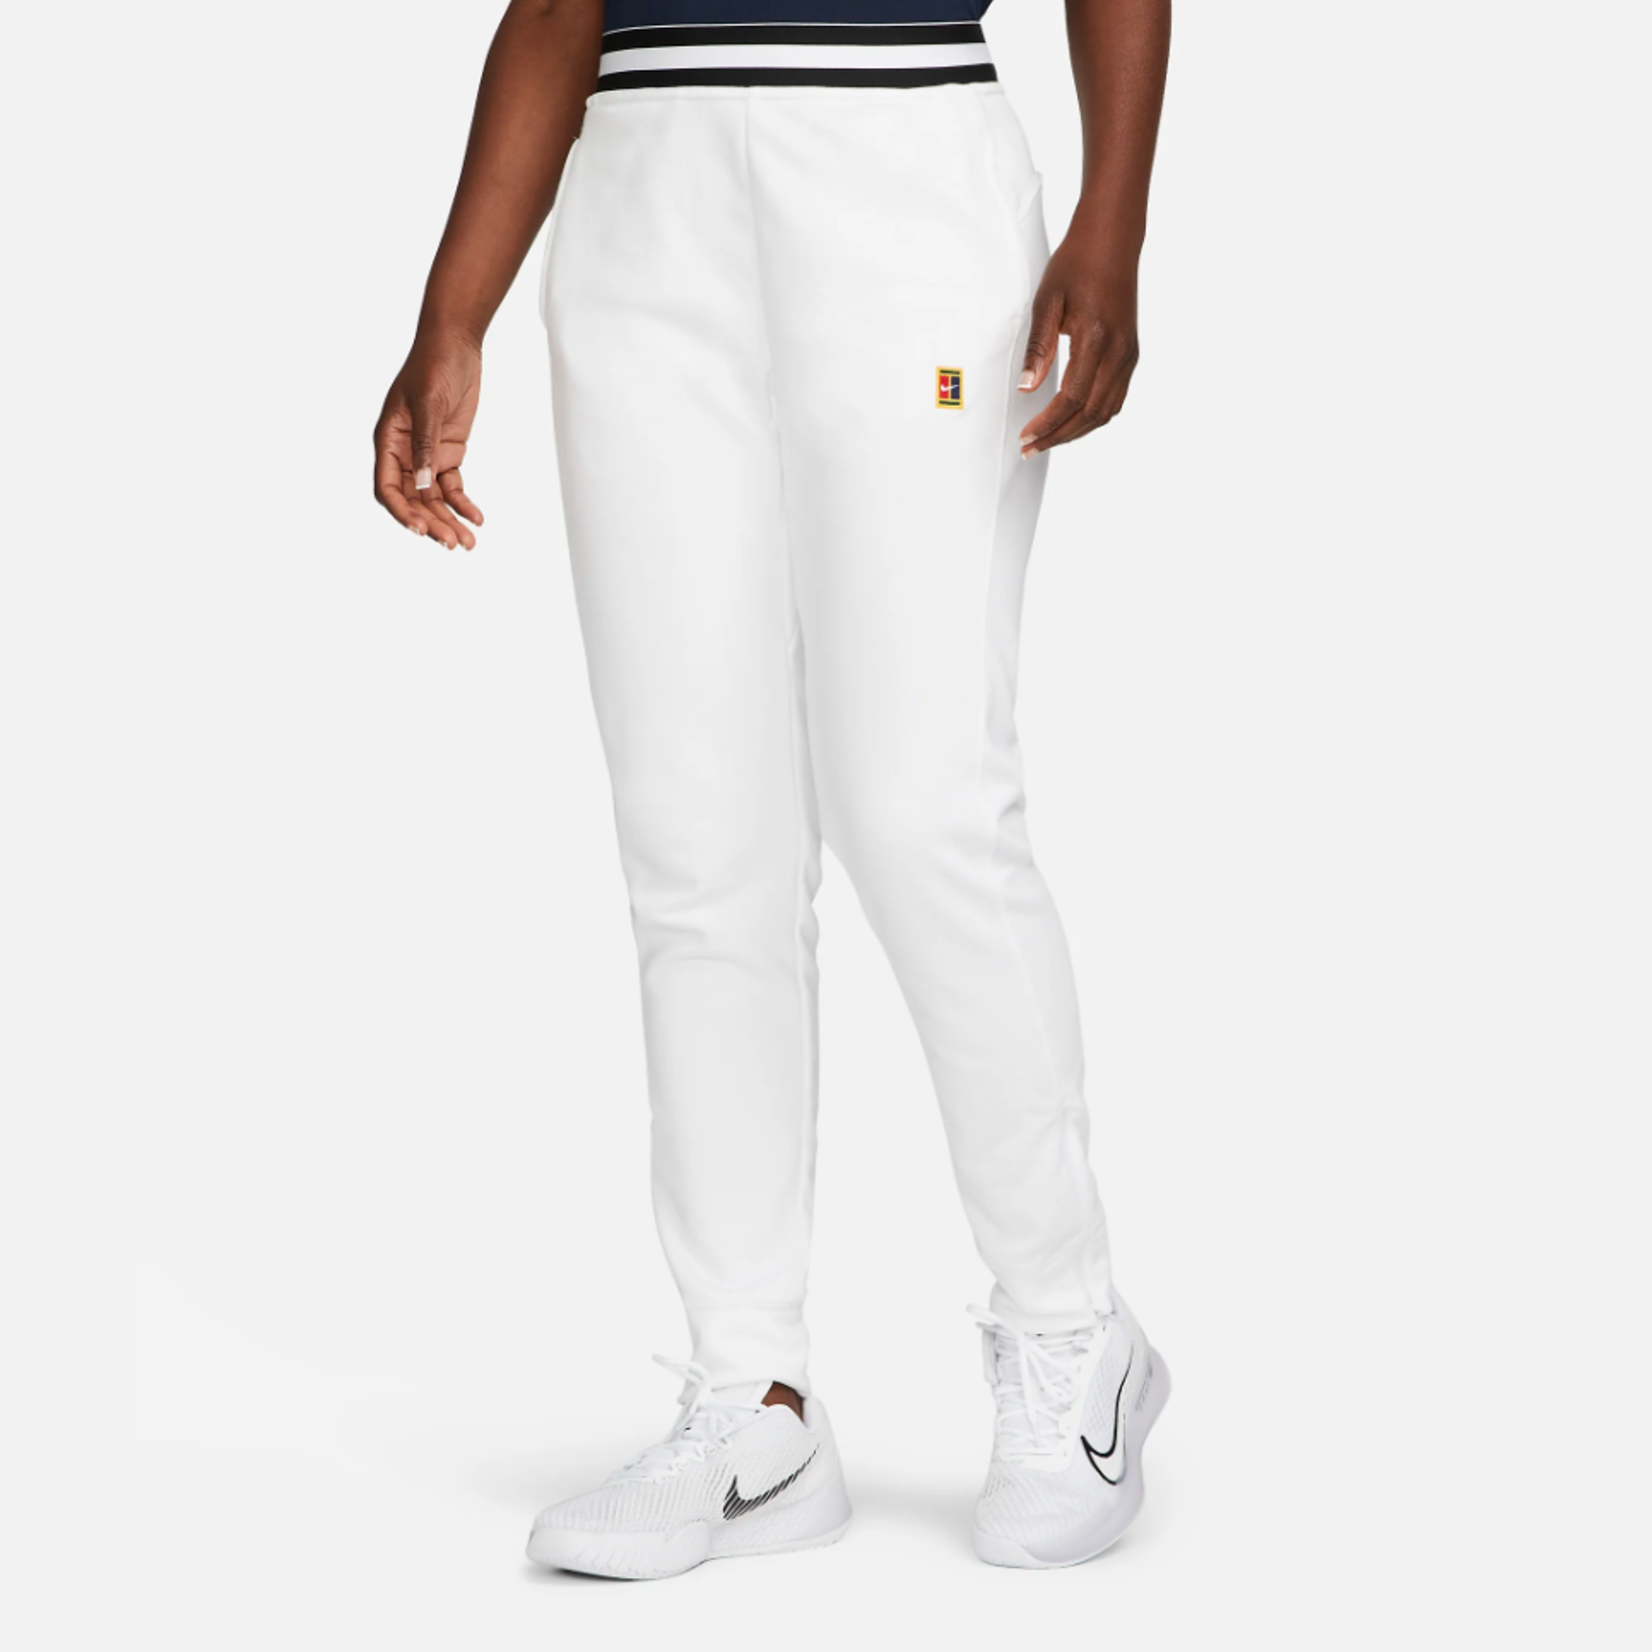 Nike Women's Nike Dri-FIT Heritage Fleece Pant